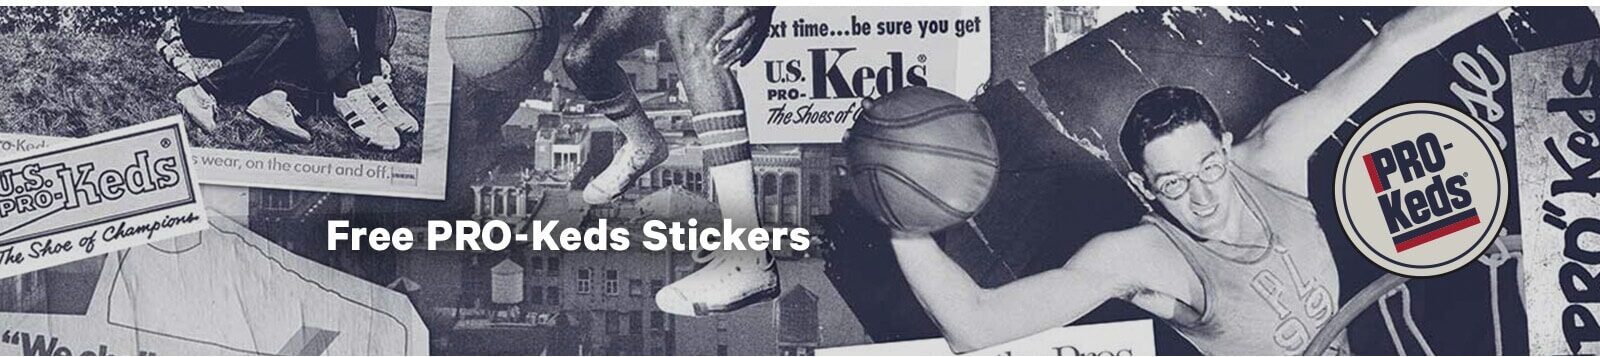 Free Pro-Keds Stickers